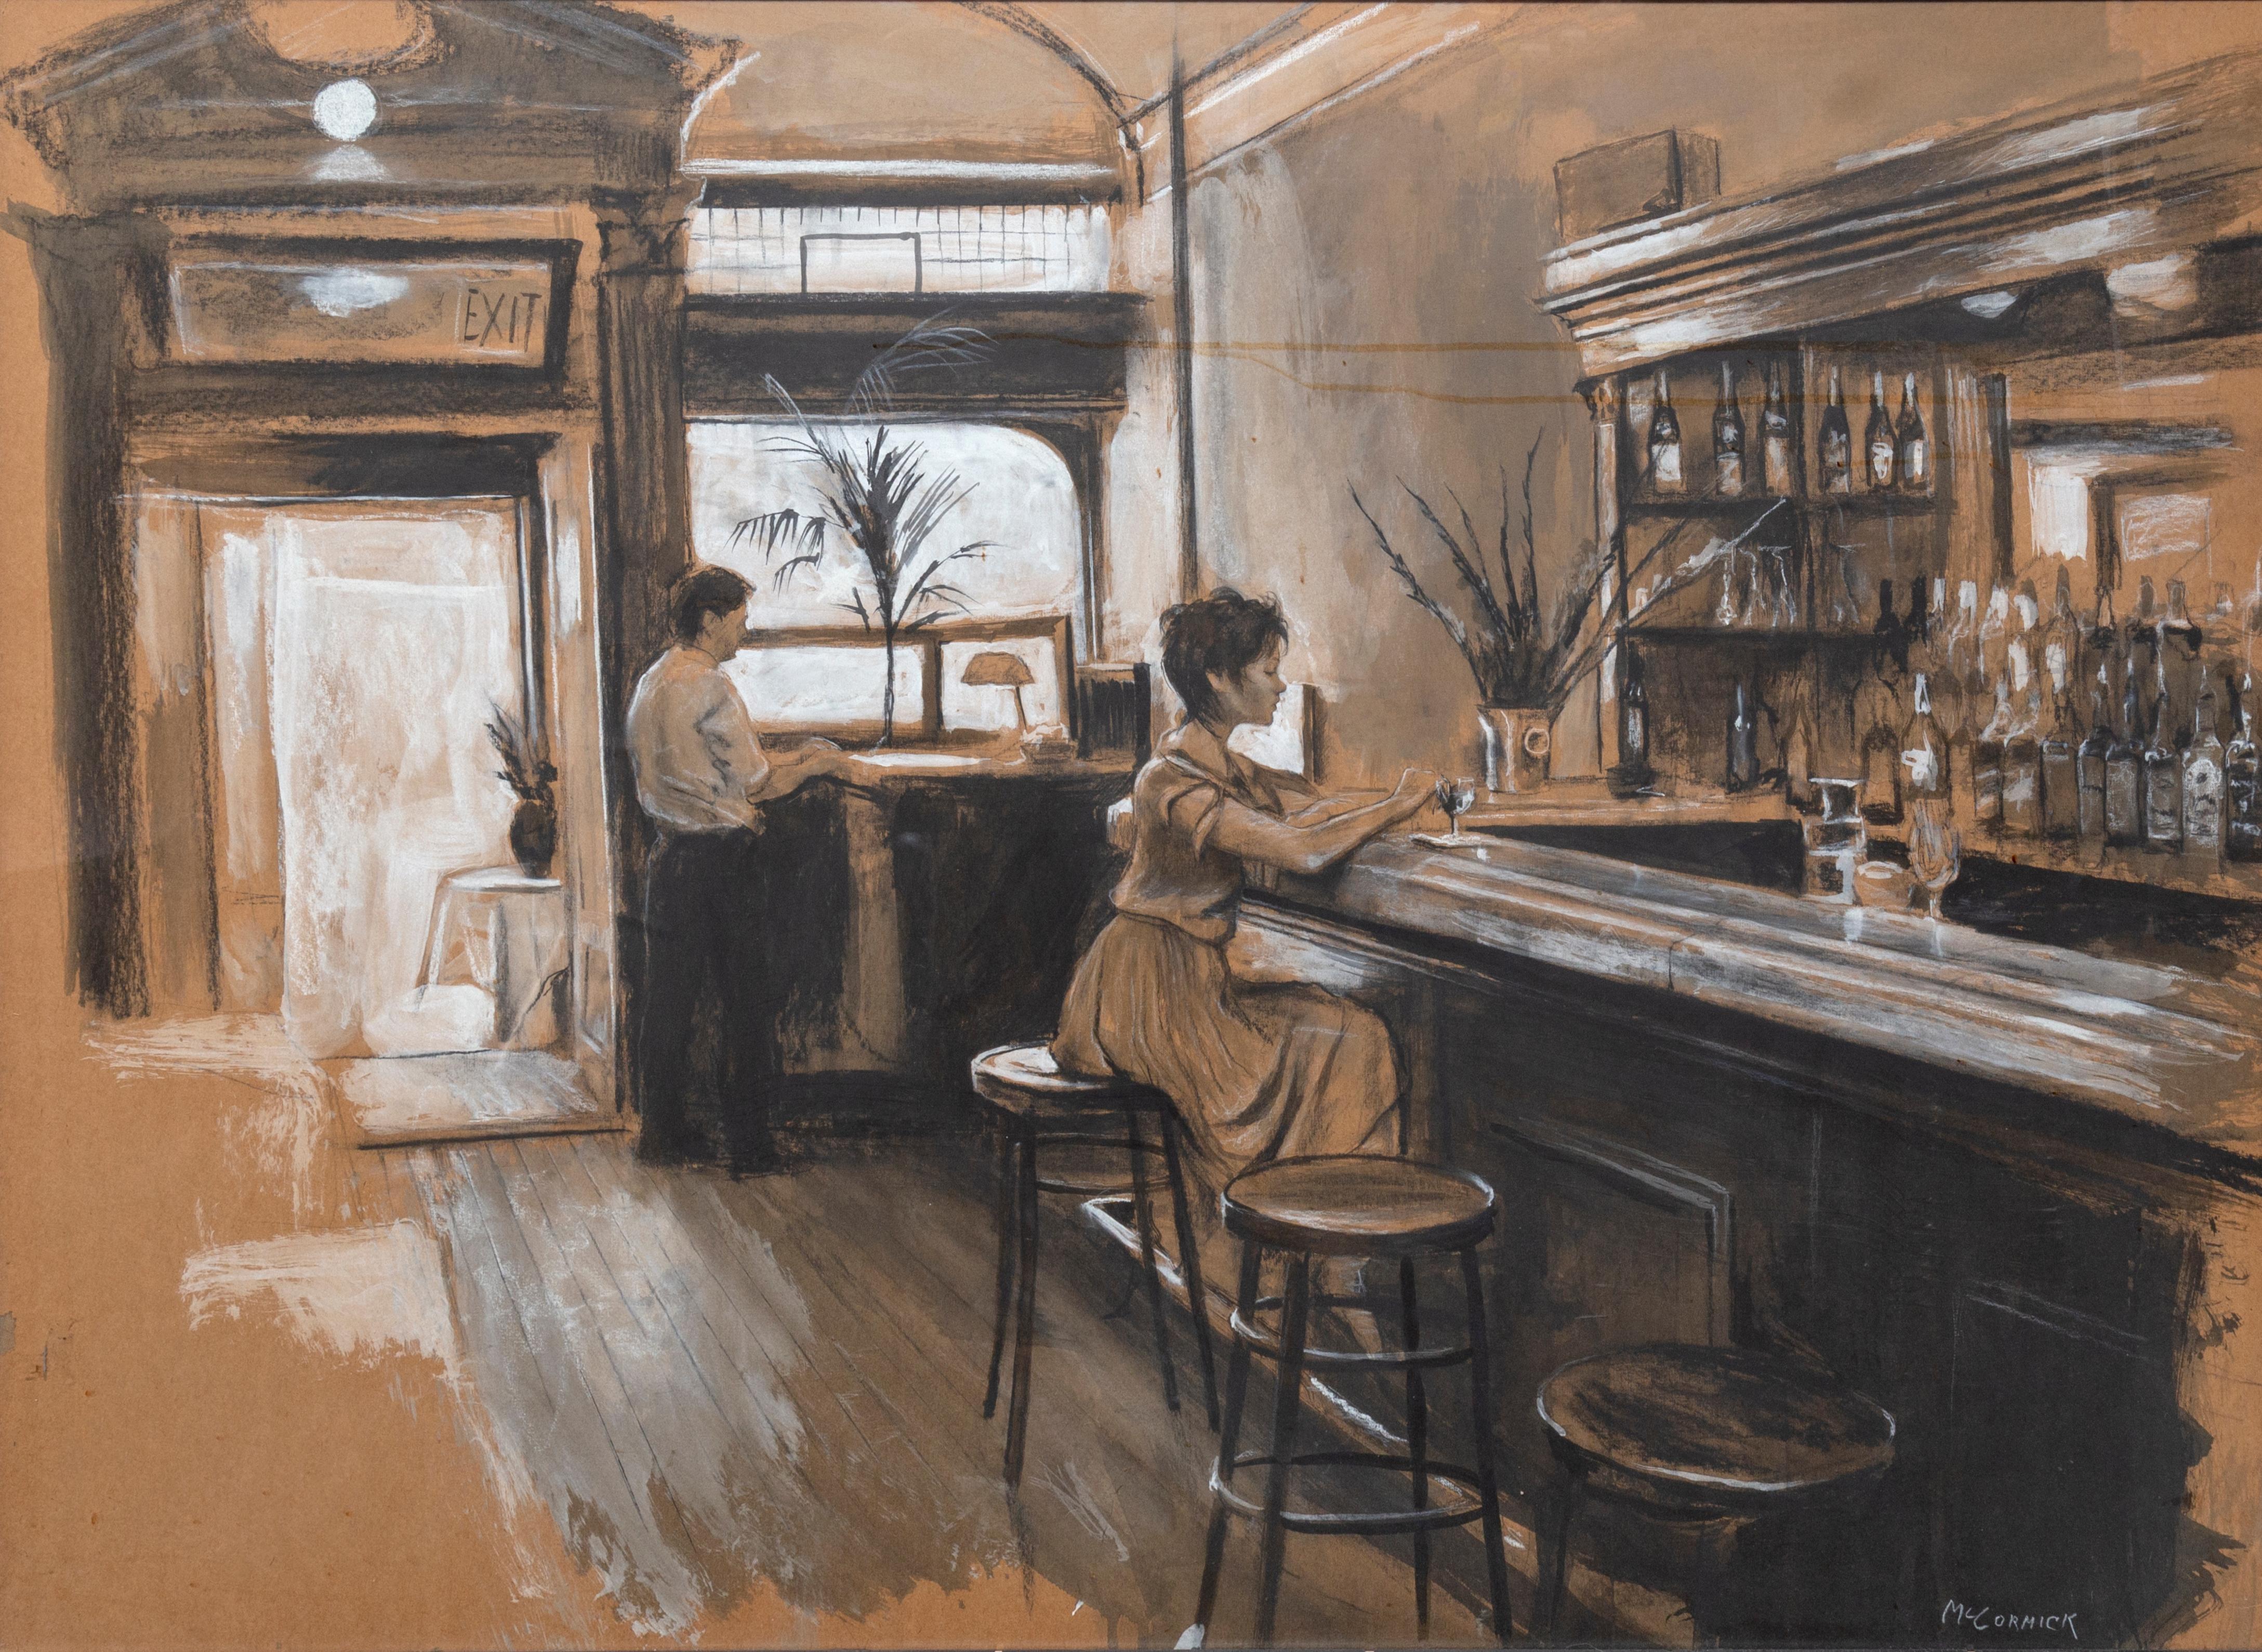 mcsorley's bar painter